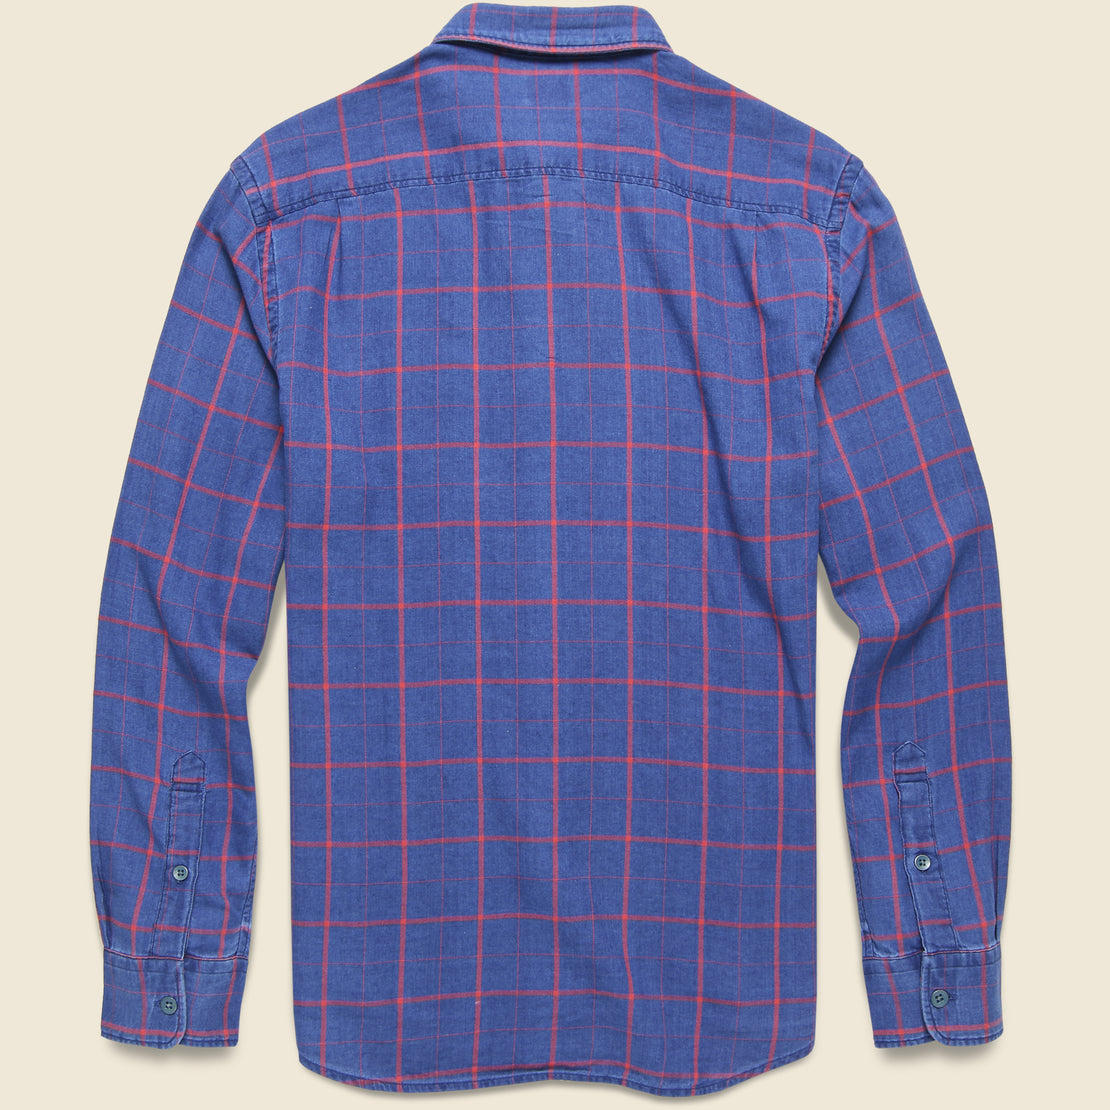 Indigo Windowpane Shirt - Indigo/Red - Faherty - STAG Provisions - Tops - L/S Woven - Plaid